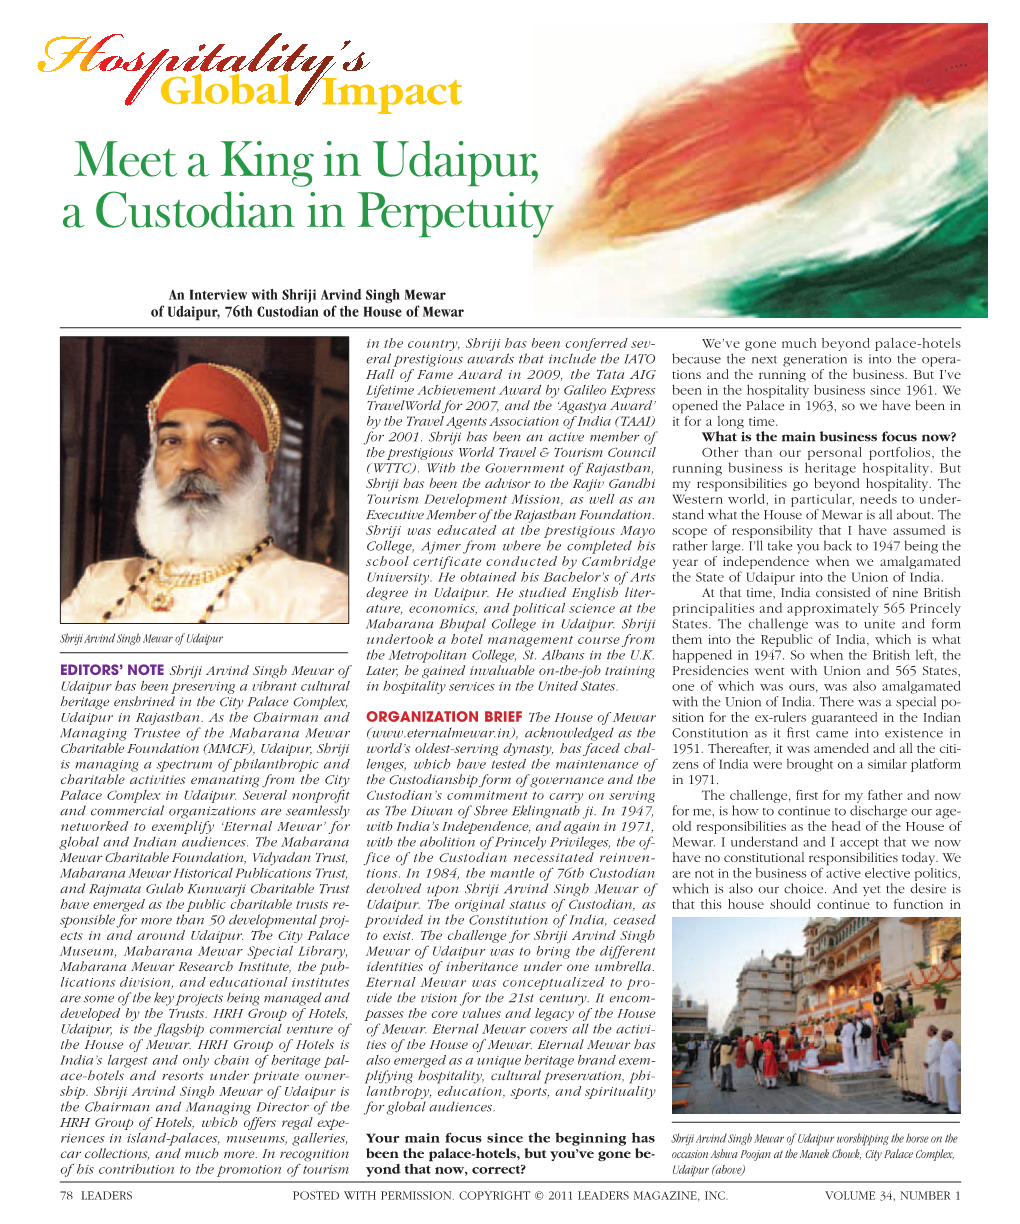 Meet a King in Udaipur, a Custodian in Perpetuity